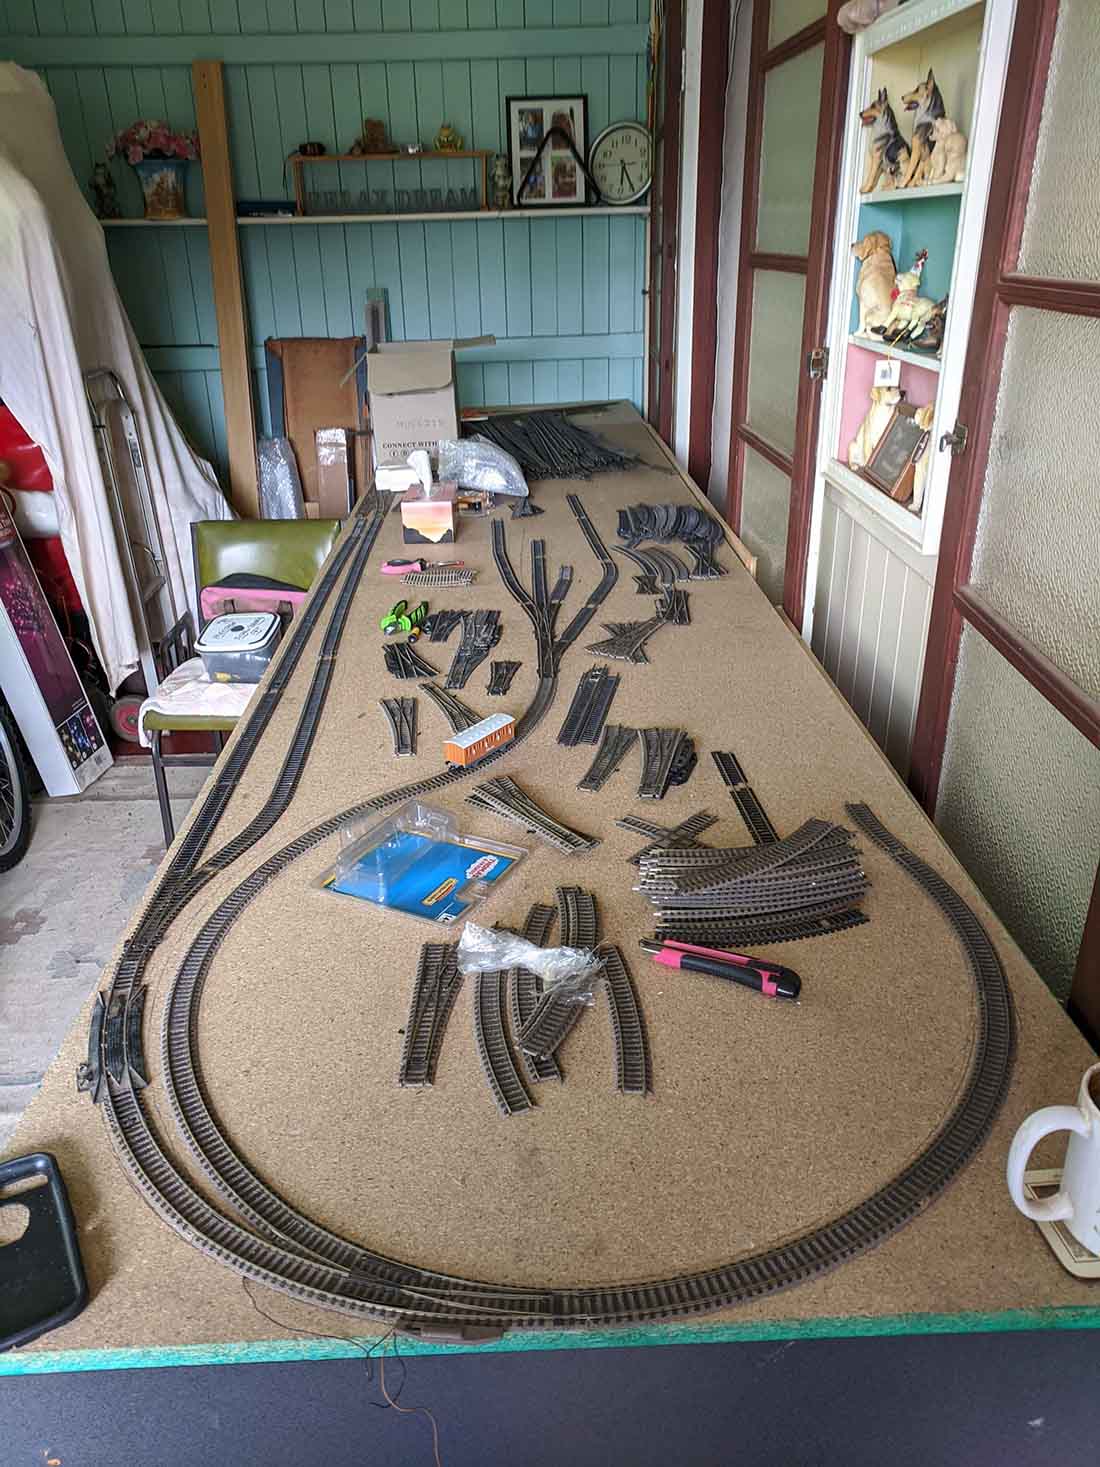 laying track model train